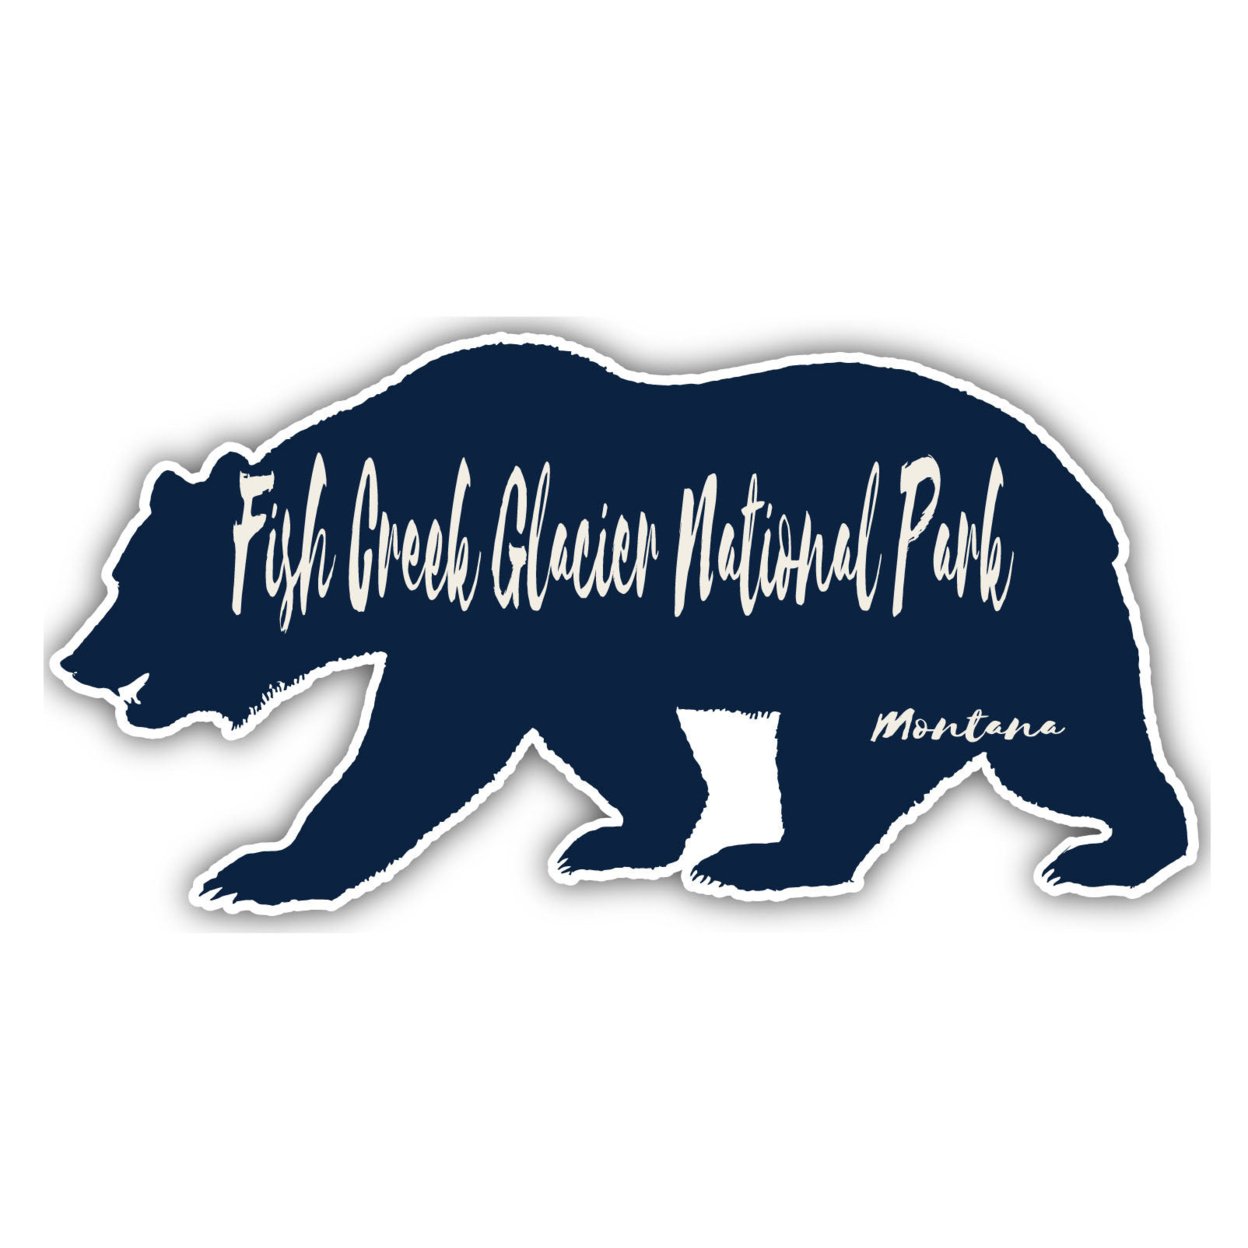 Fish Creek Glacier National Park Montana Souvenir Decorative Stickers (Choose Theme And Size) - Single Unit, 10-Inch, Bear